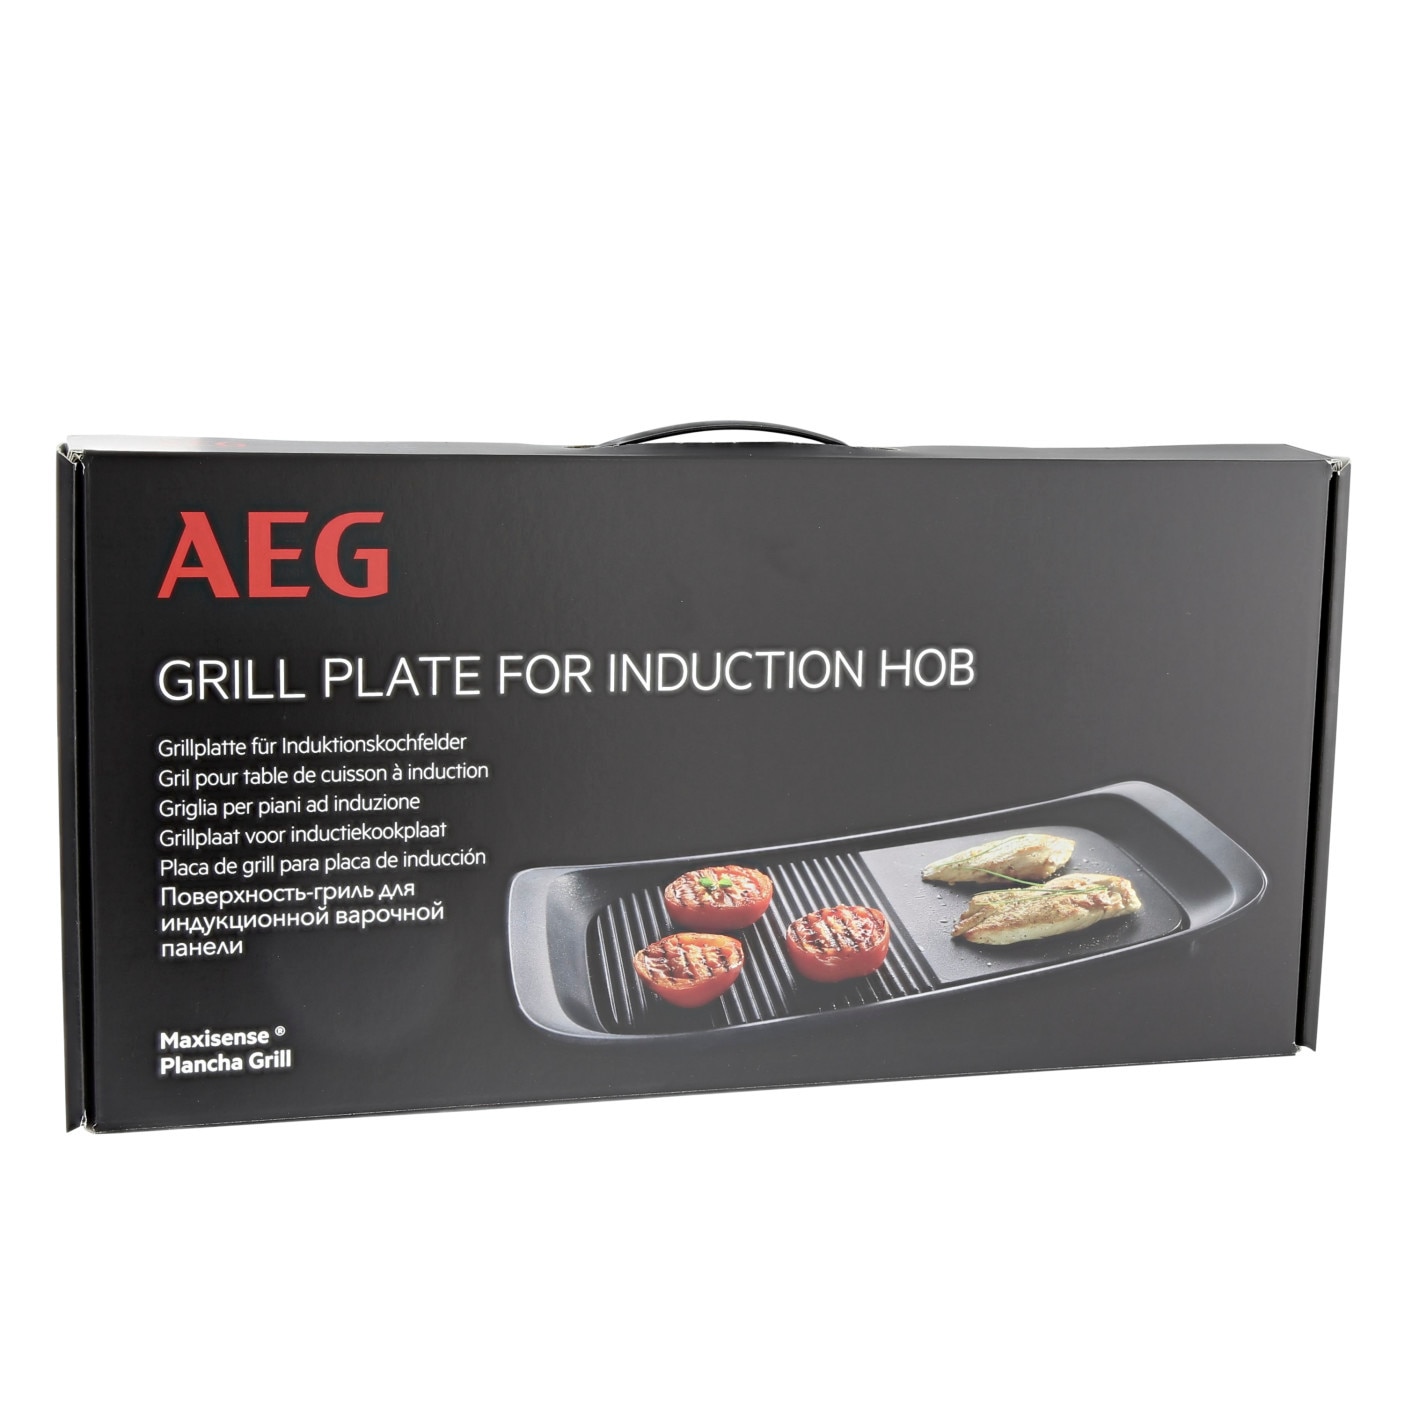 AEG Plancha grill – INFI